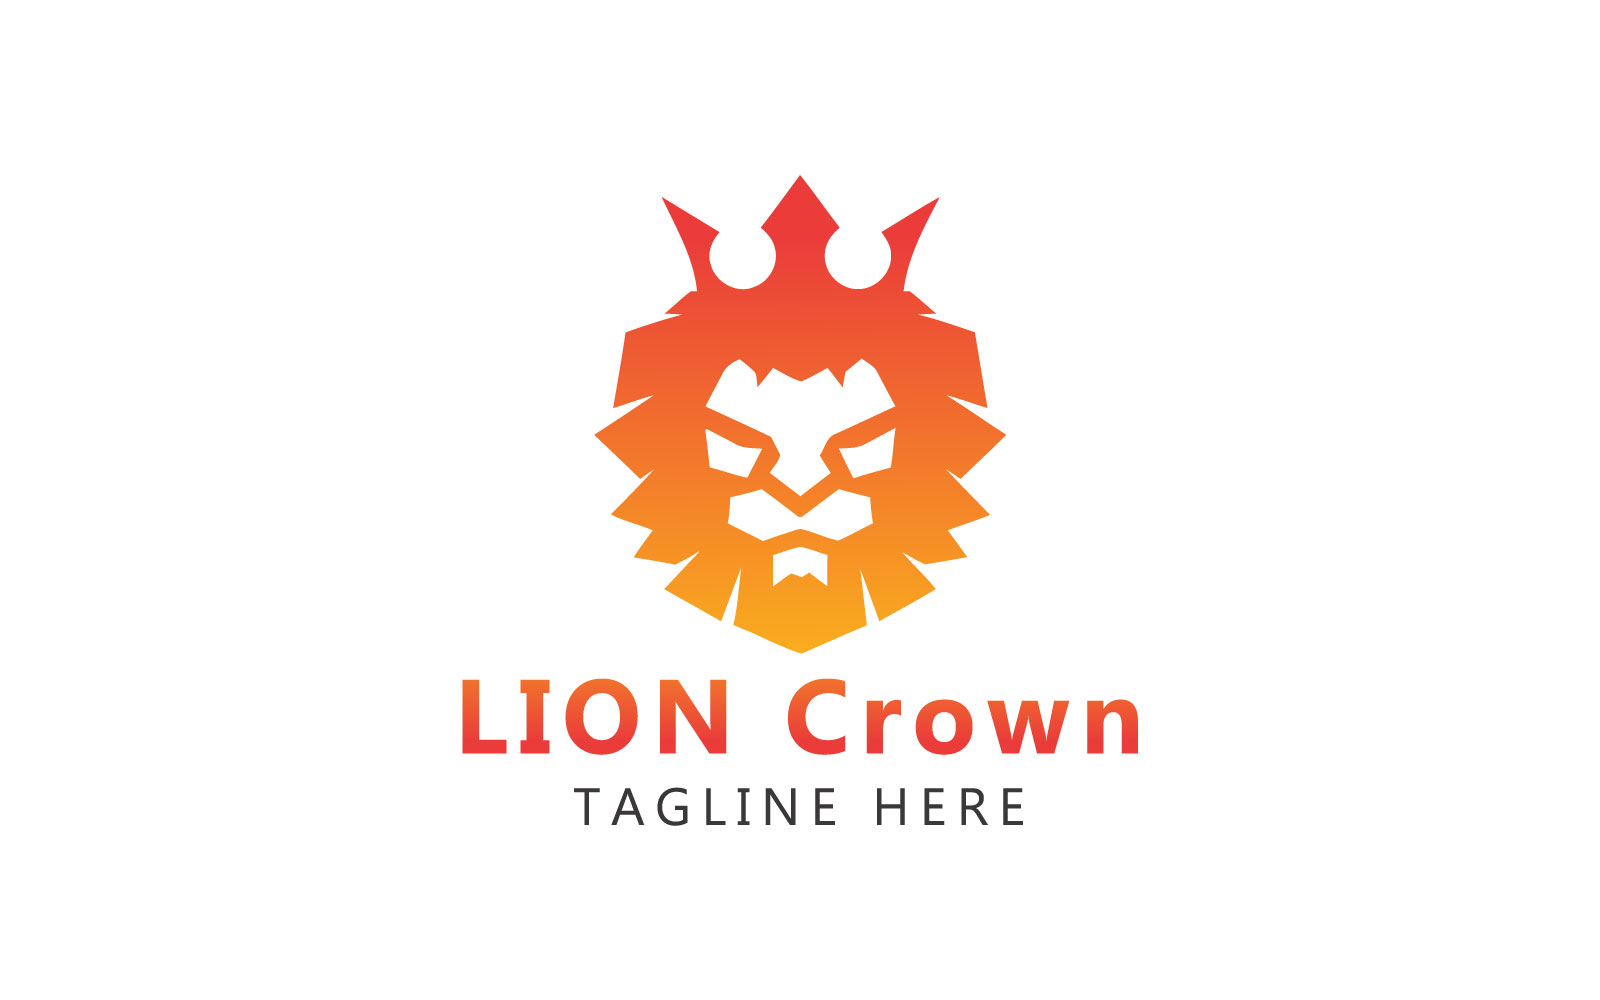 King Lion Sticker Decal Fun Funny Pop Art Colorful | eBay